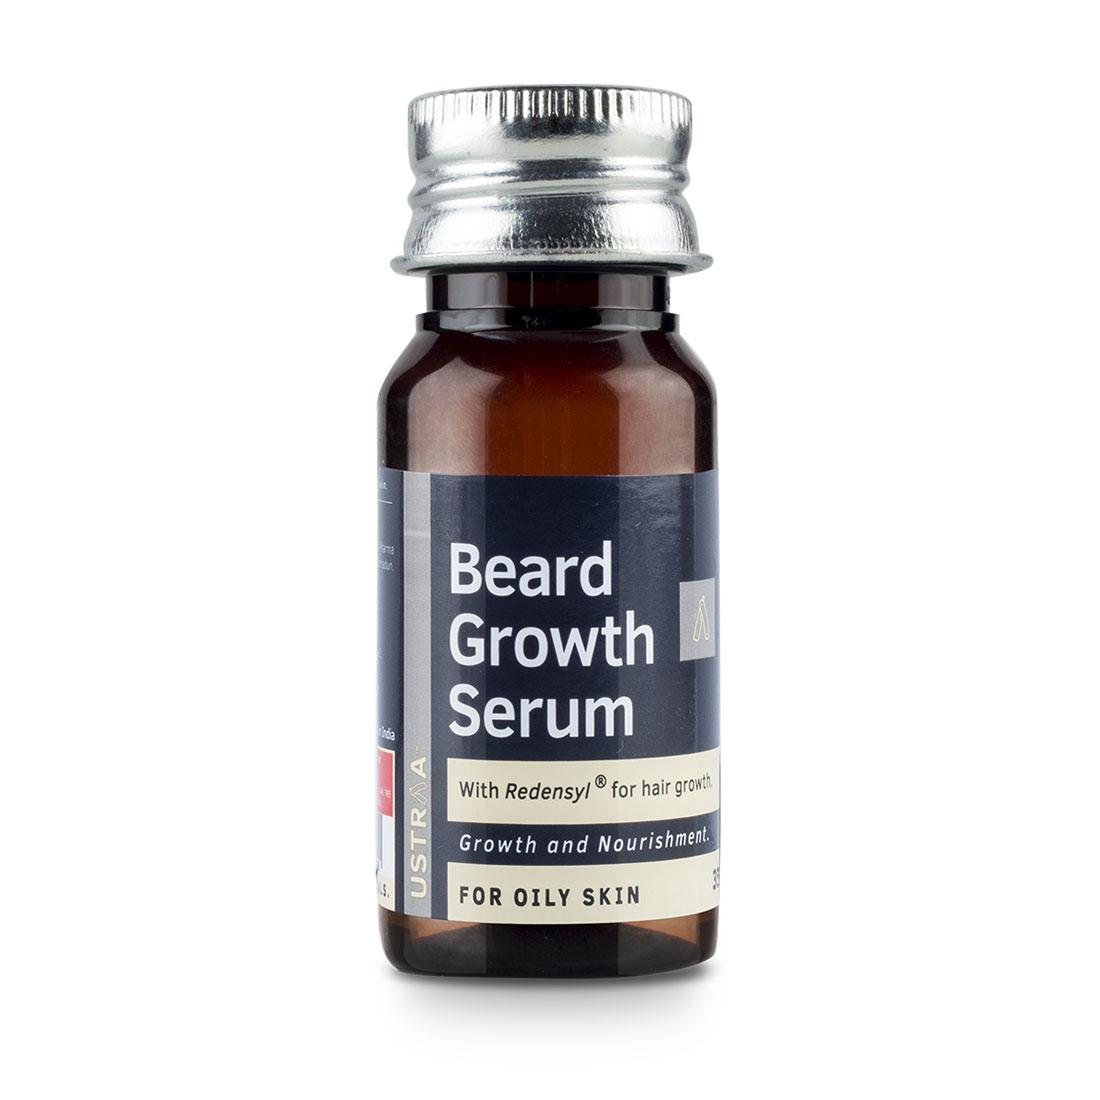 USTRAA Beard Growth Serum (Oily Skin) 35 ml - With Redensyl for Acne-prone & Sensitive Skin, Boosts Beard Growth, Beard Nourishment and Moisturization